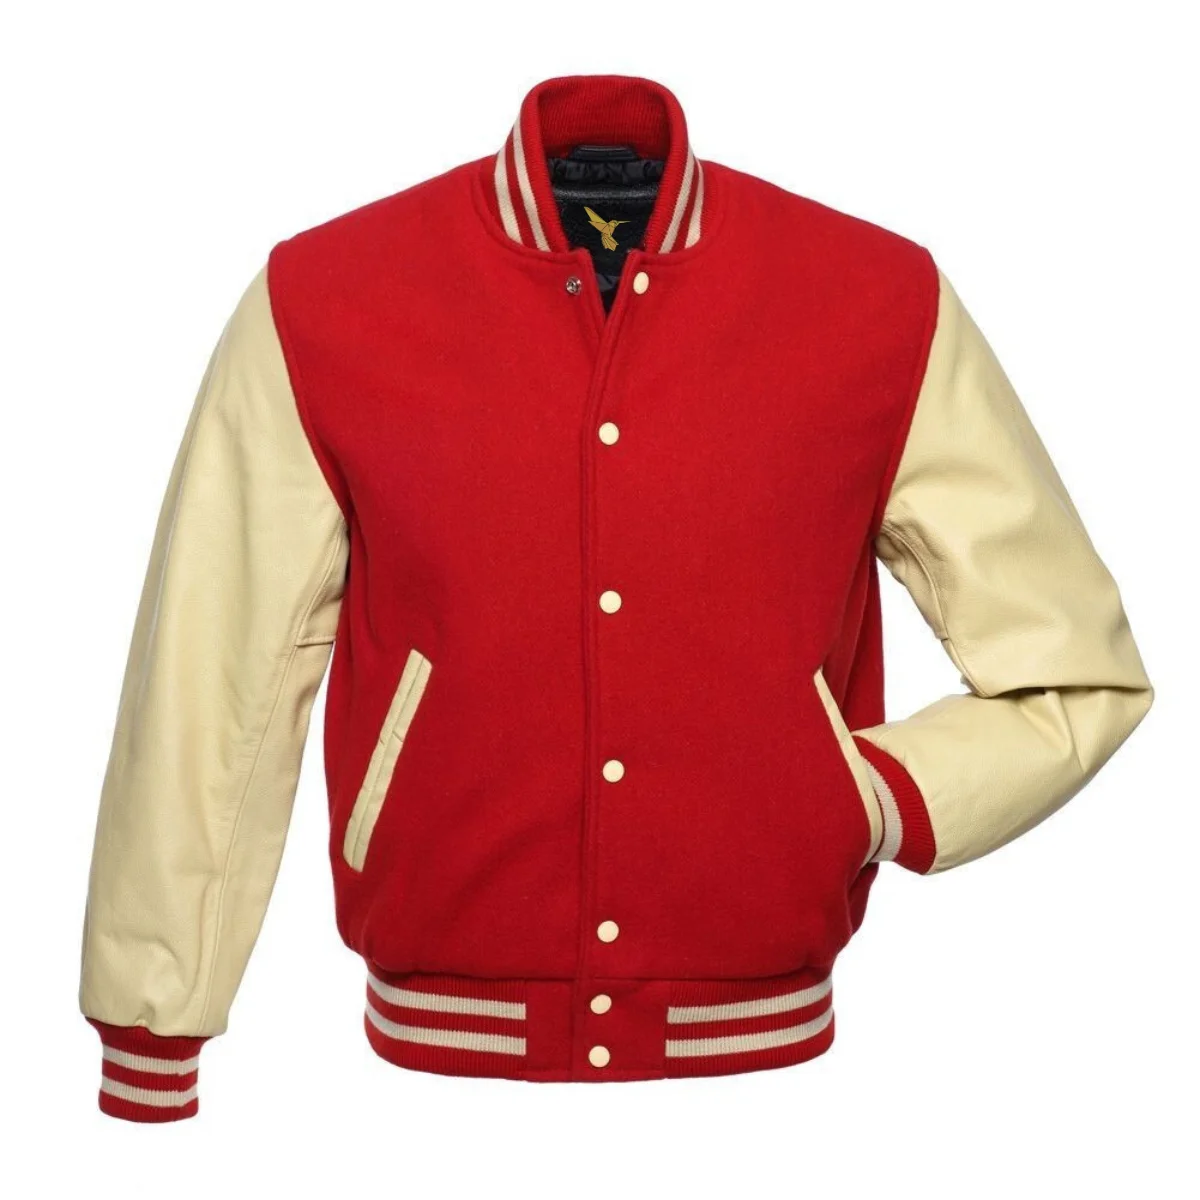 Right Image of Men's Varsity Jacket